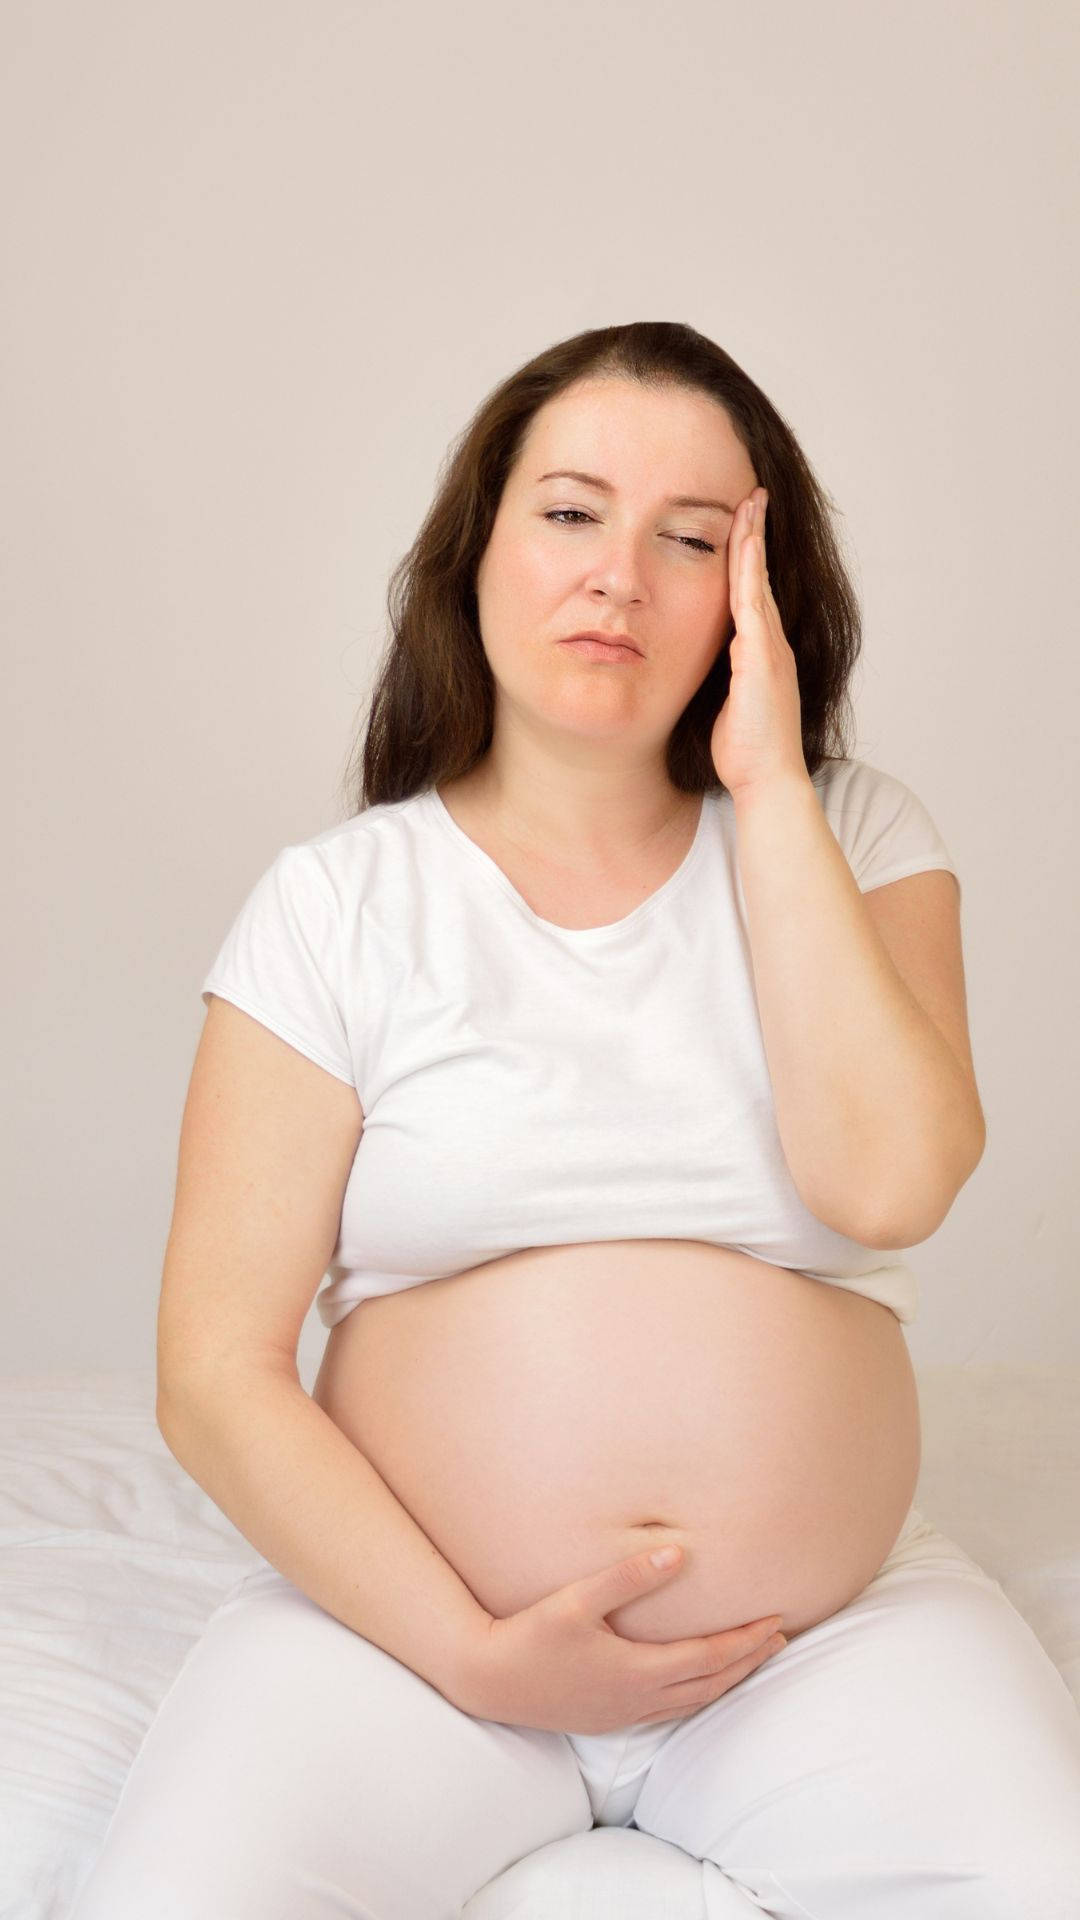 Pregnancy Woman Holding Head Wallpaper